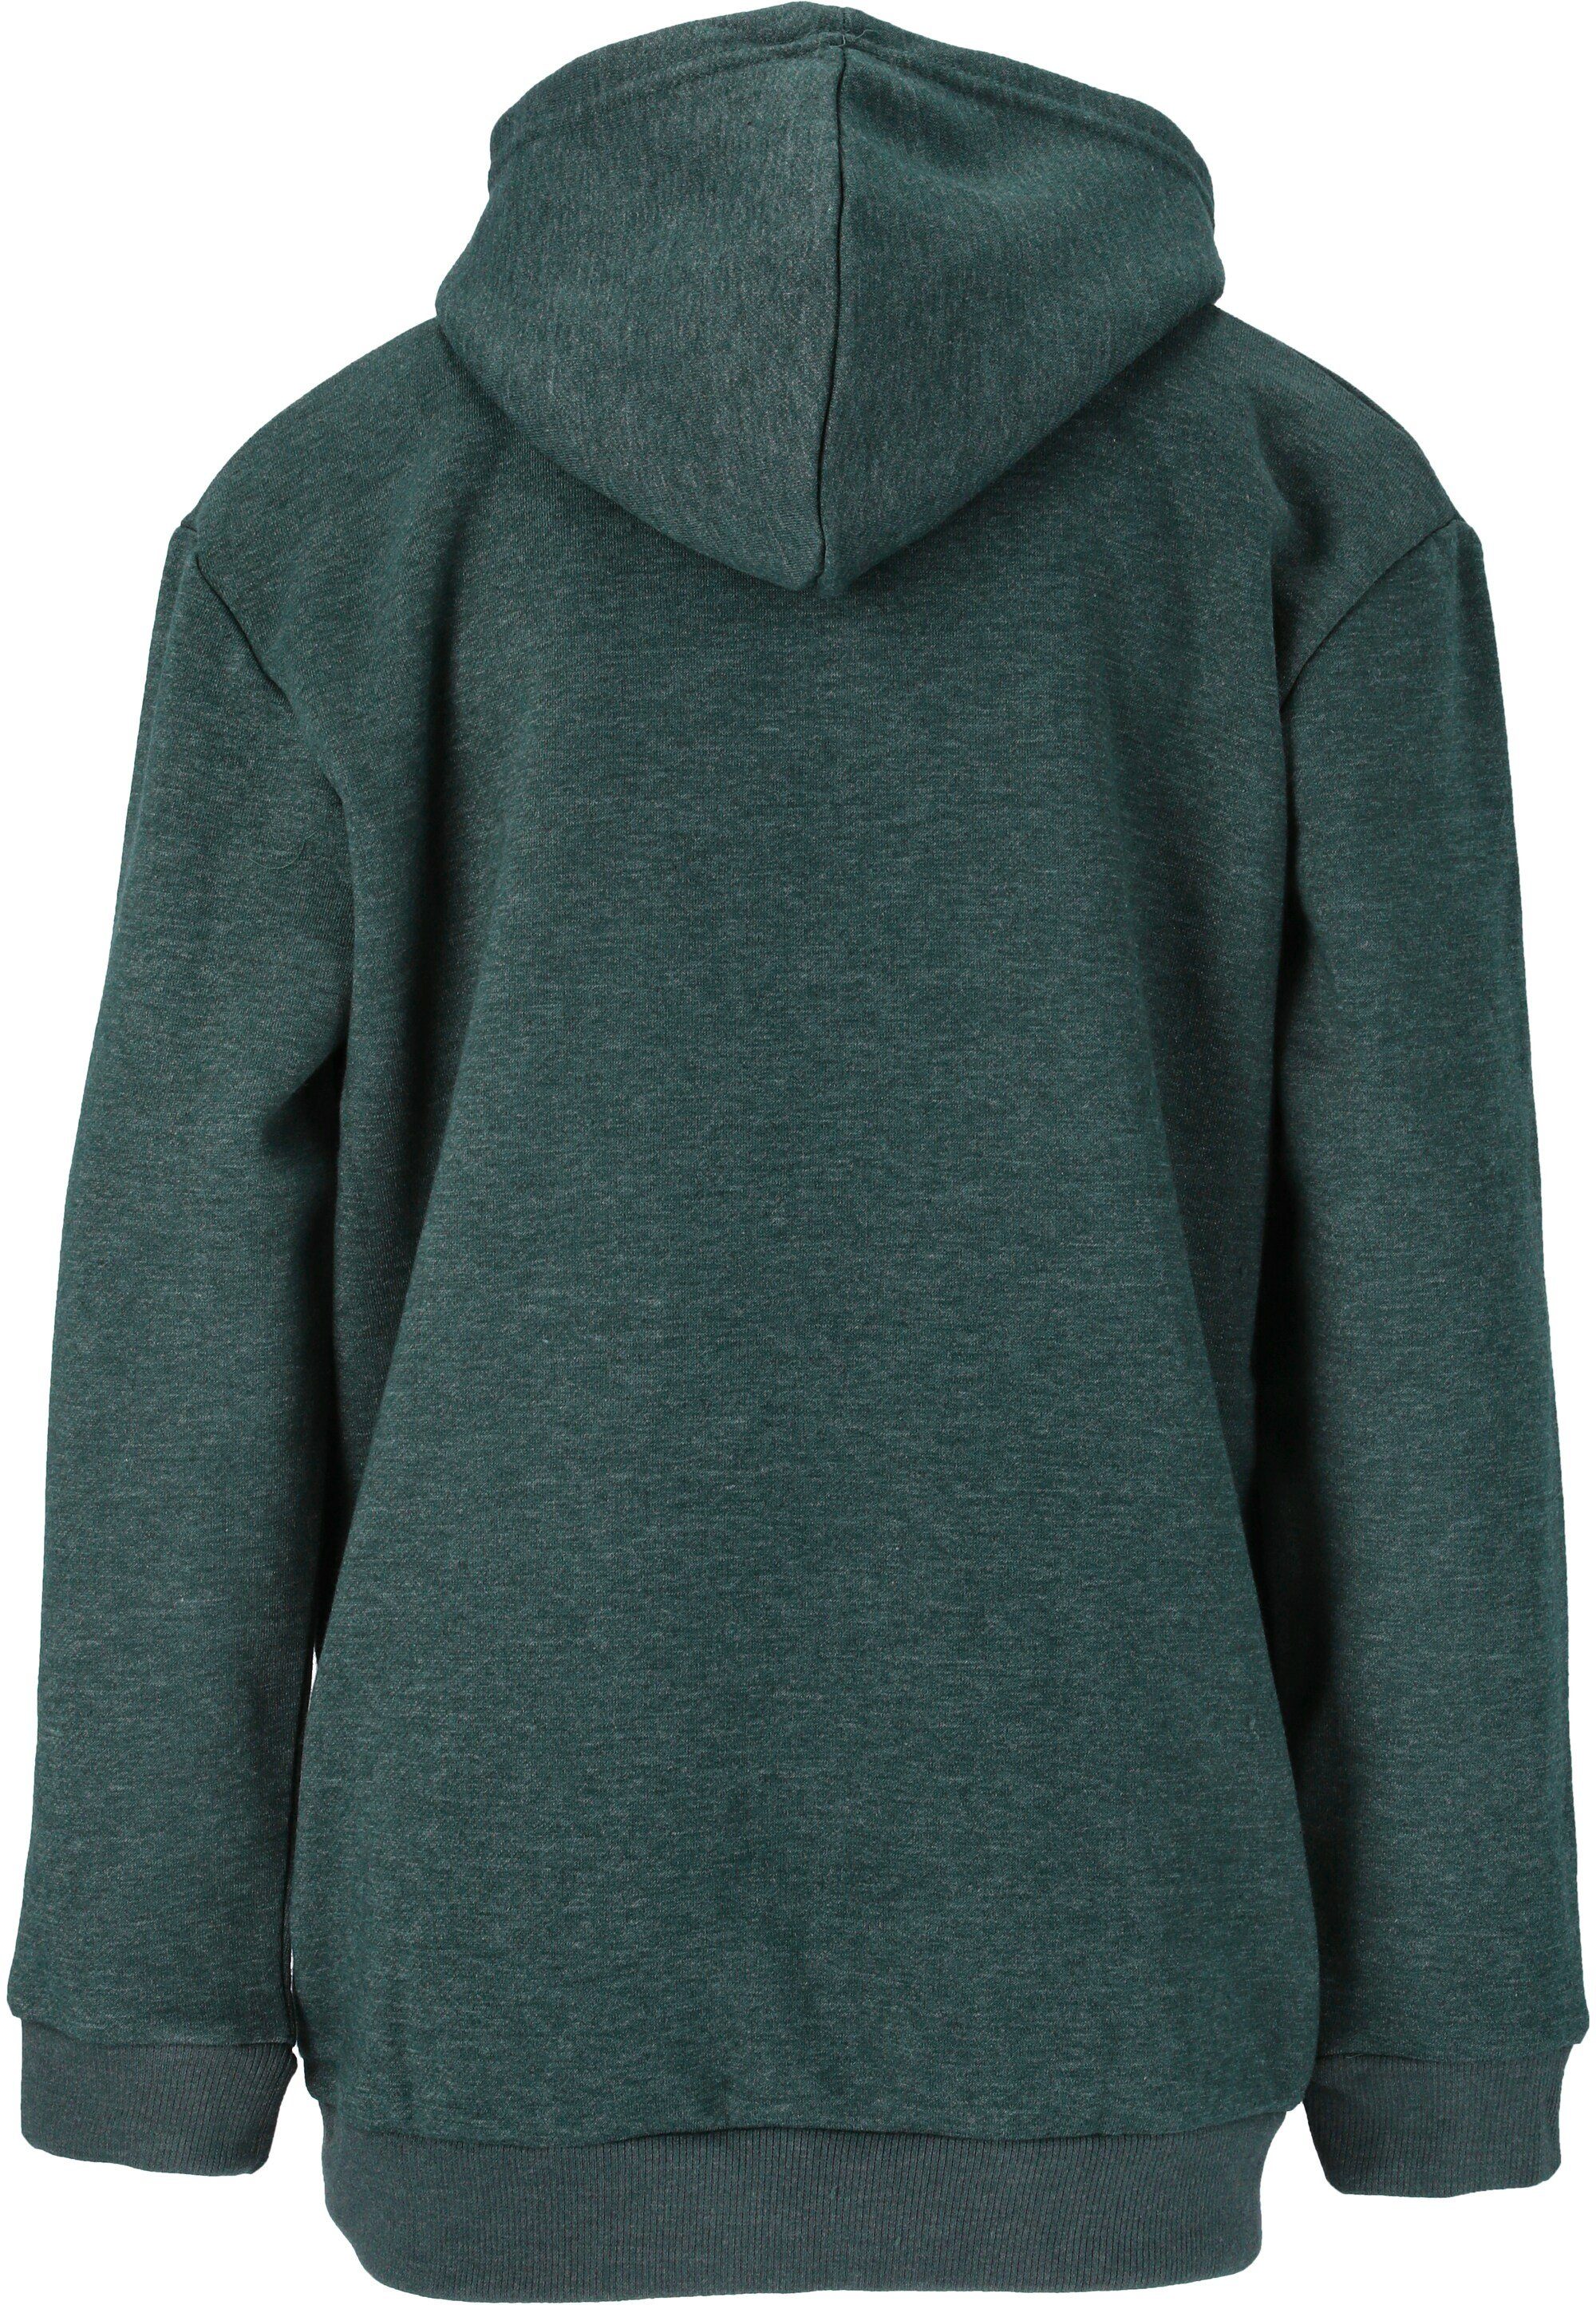 Frontprint CRUZ mit Sweeny dunkelgrün trendigem Sweatshirt